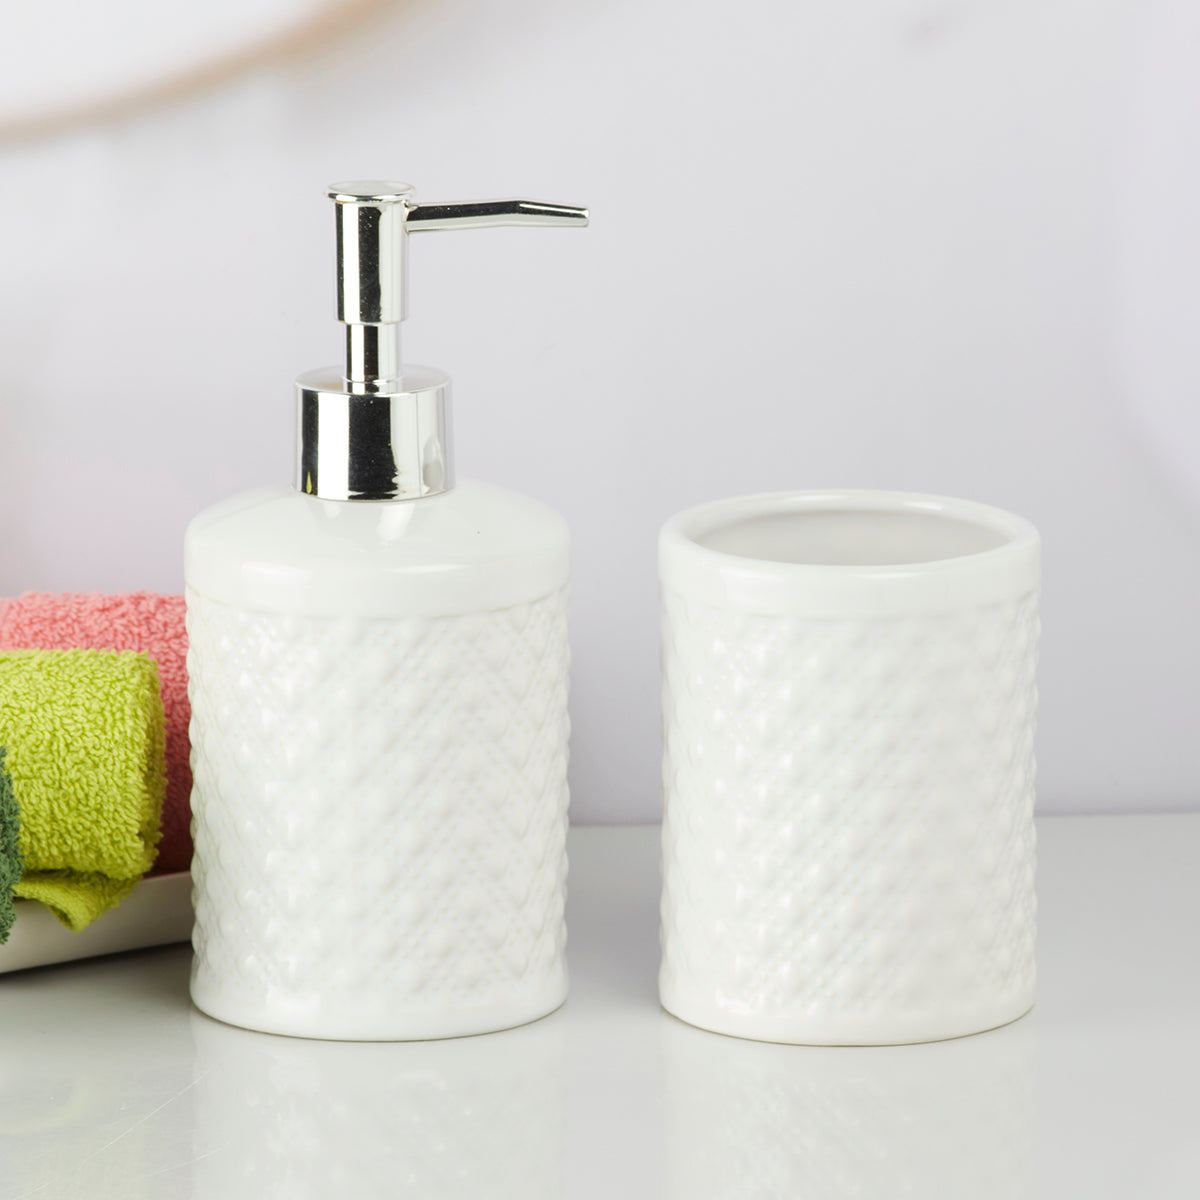 Ceramic Bathroom Accessories Set of 2 Bath Set with Soap Dispenser (9720)